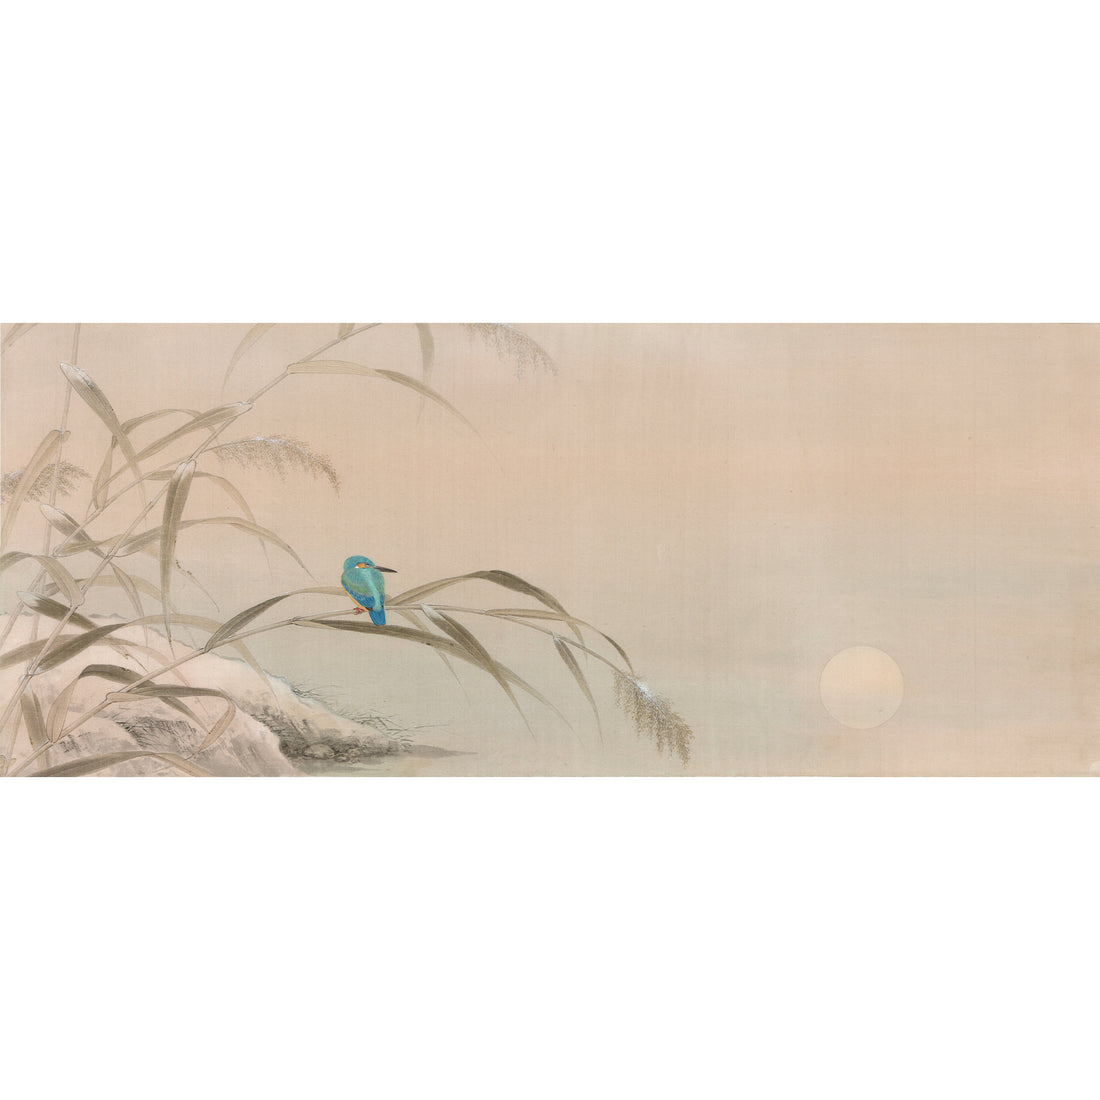 Kingfisher at Winter Dusk